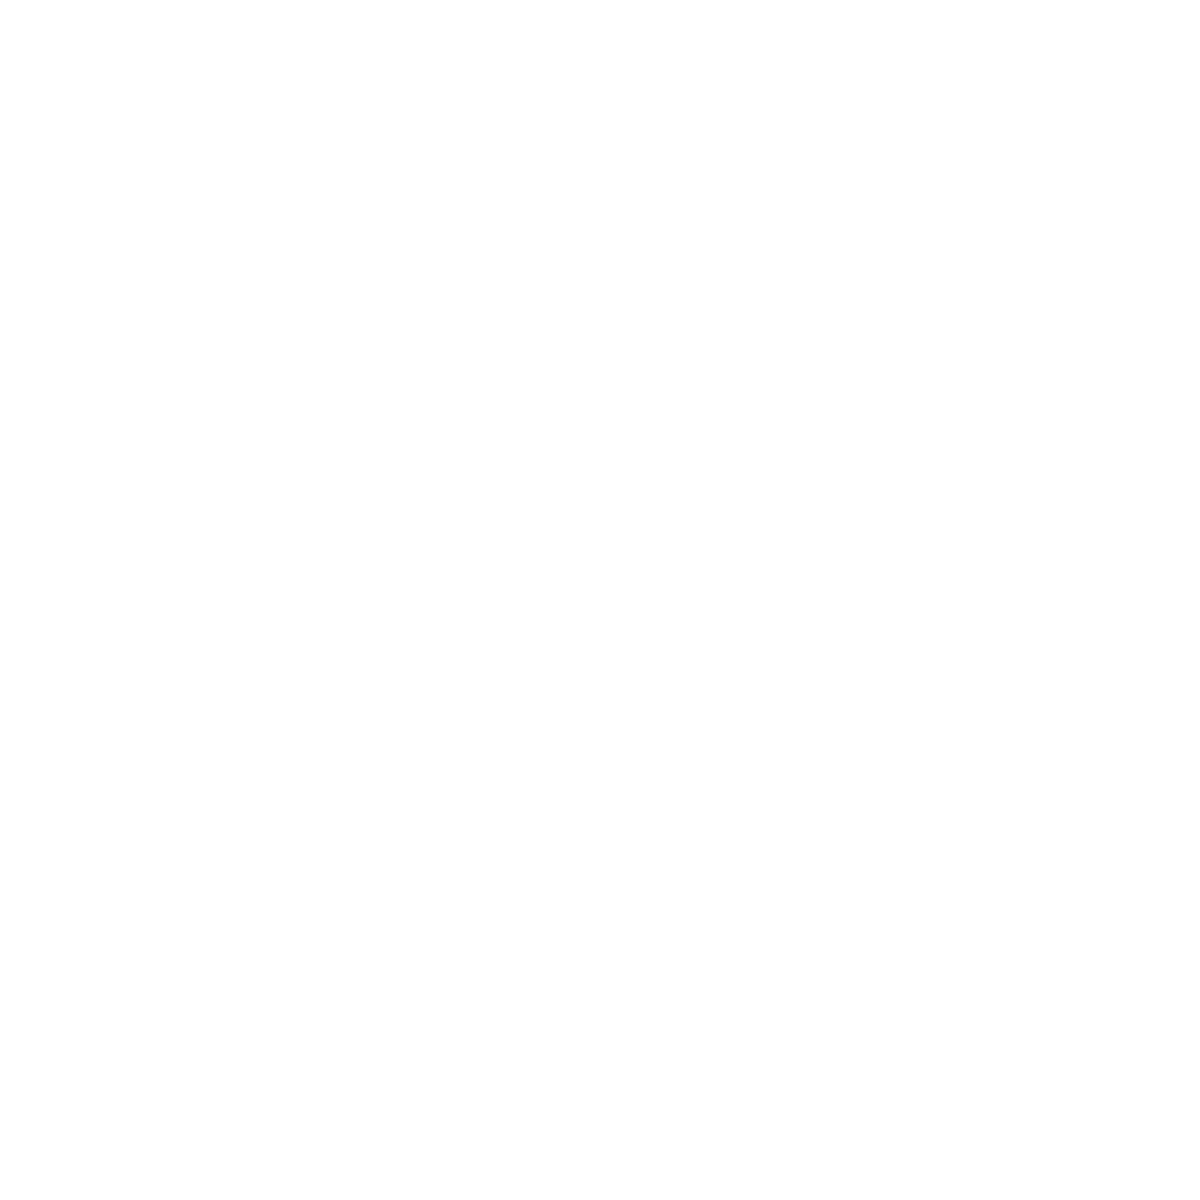 Exit Division - Original Rock Band from Calgary Alberta